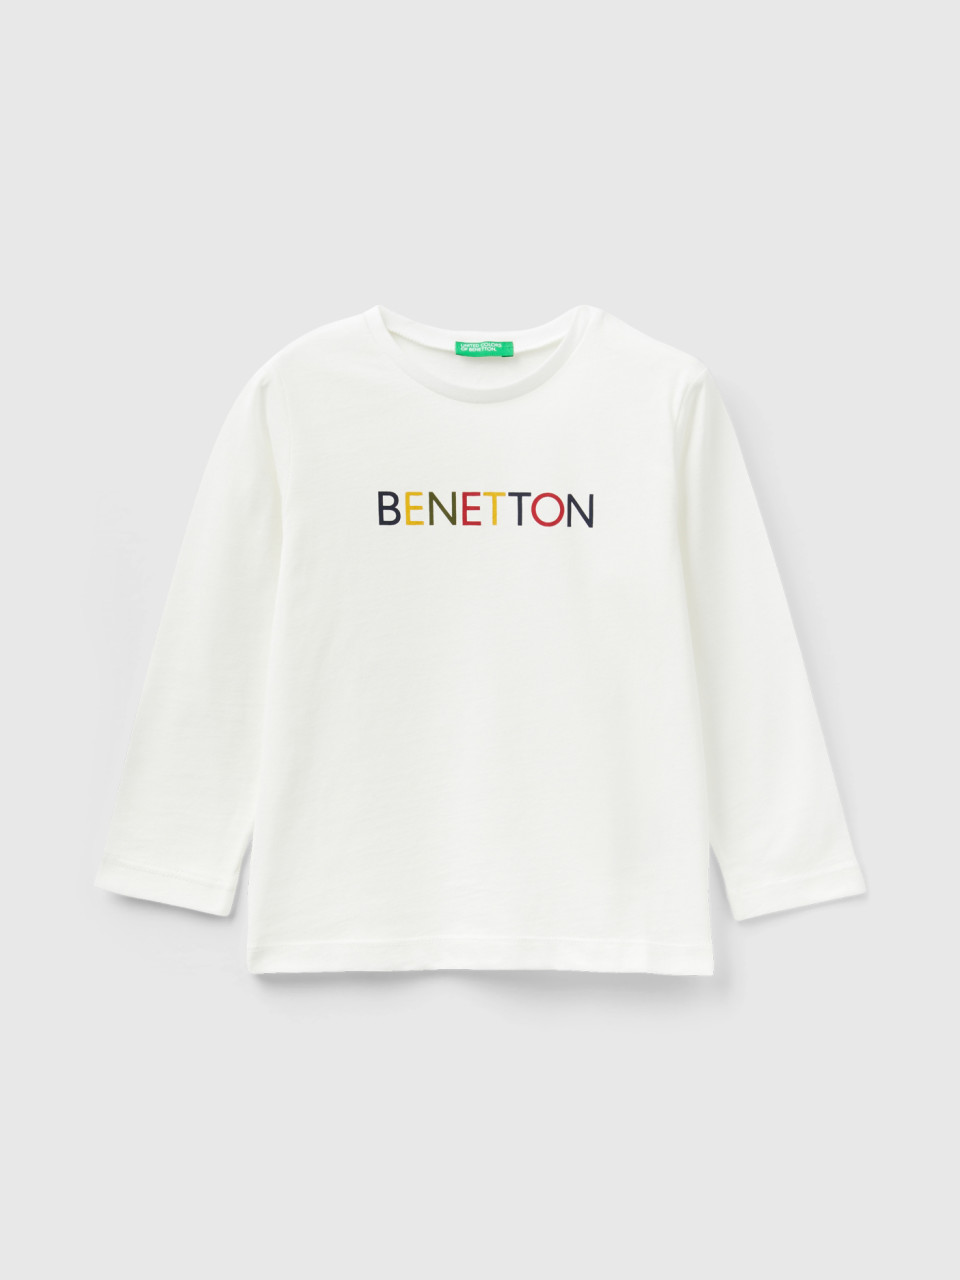 Benetton, Long Sleeve Organic Cotton T-shirt, Creamy White, Kids